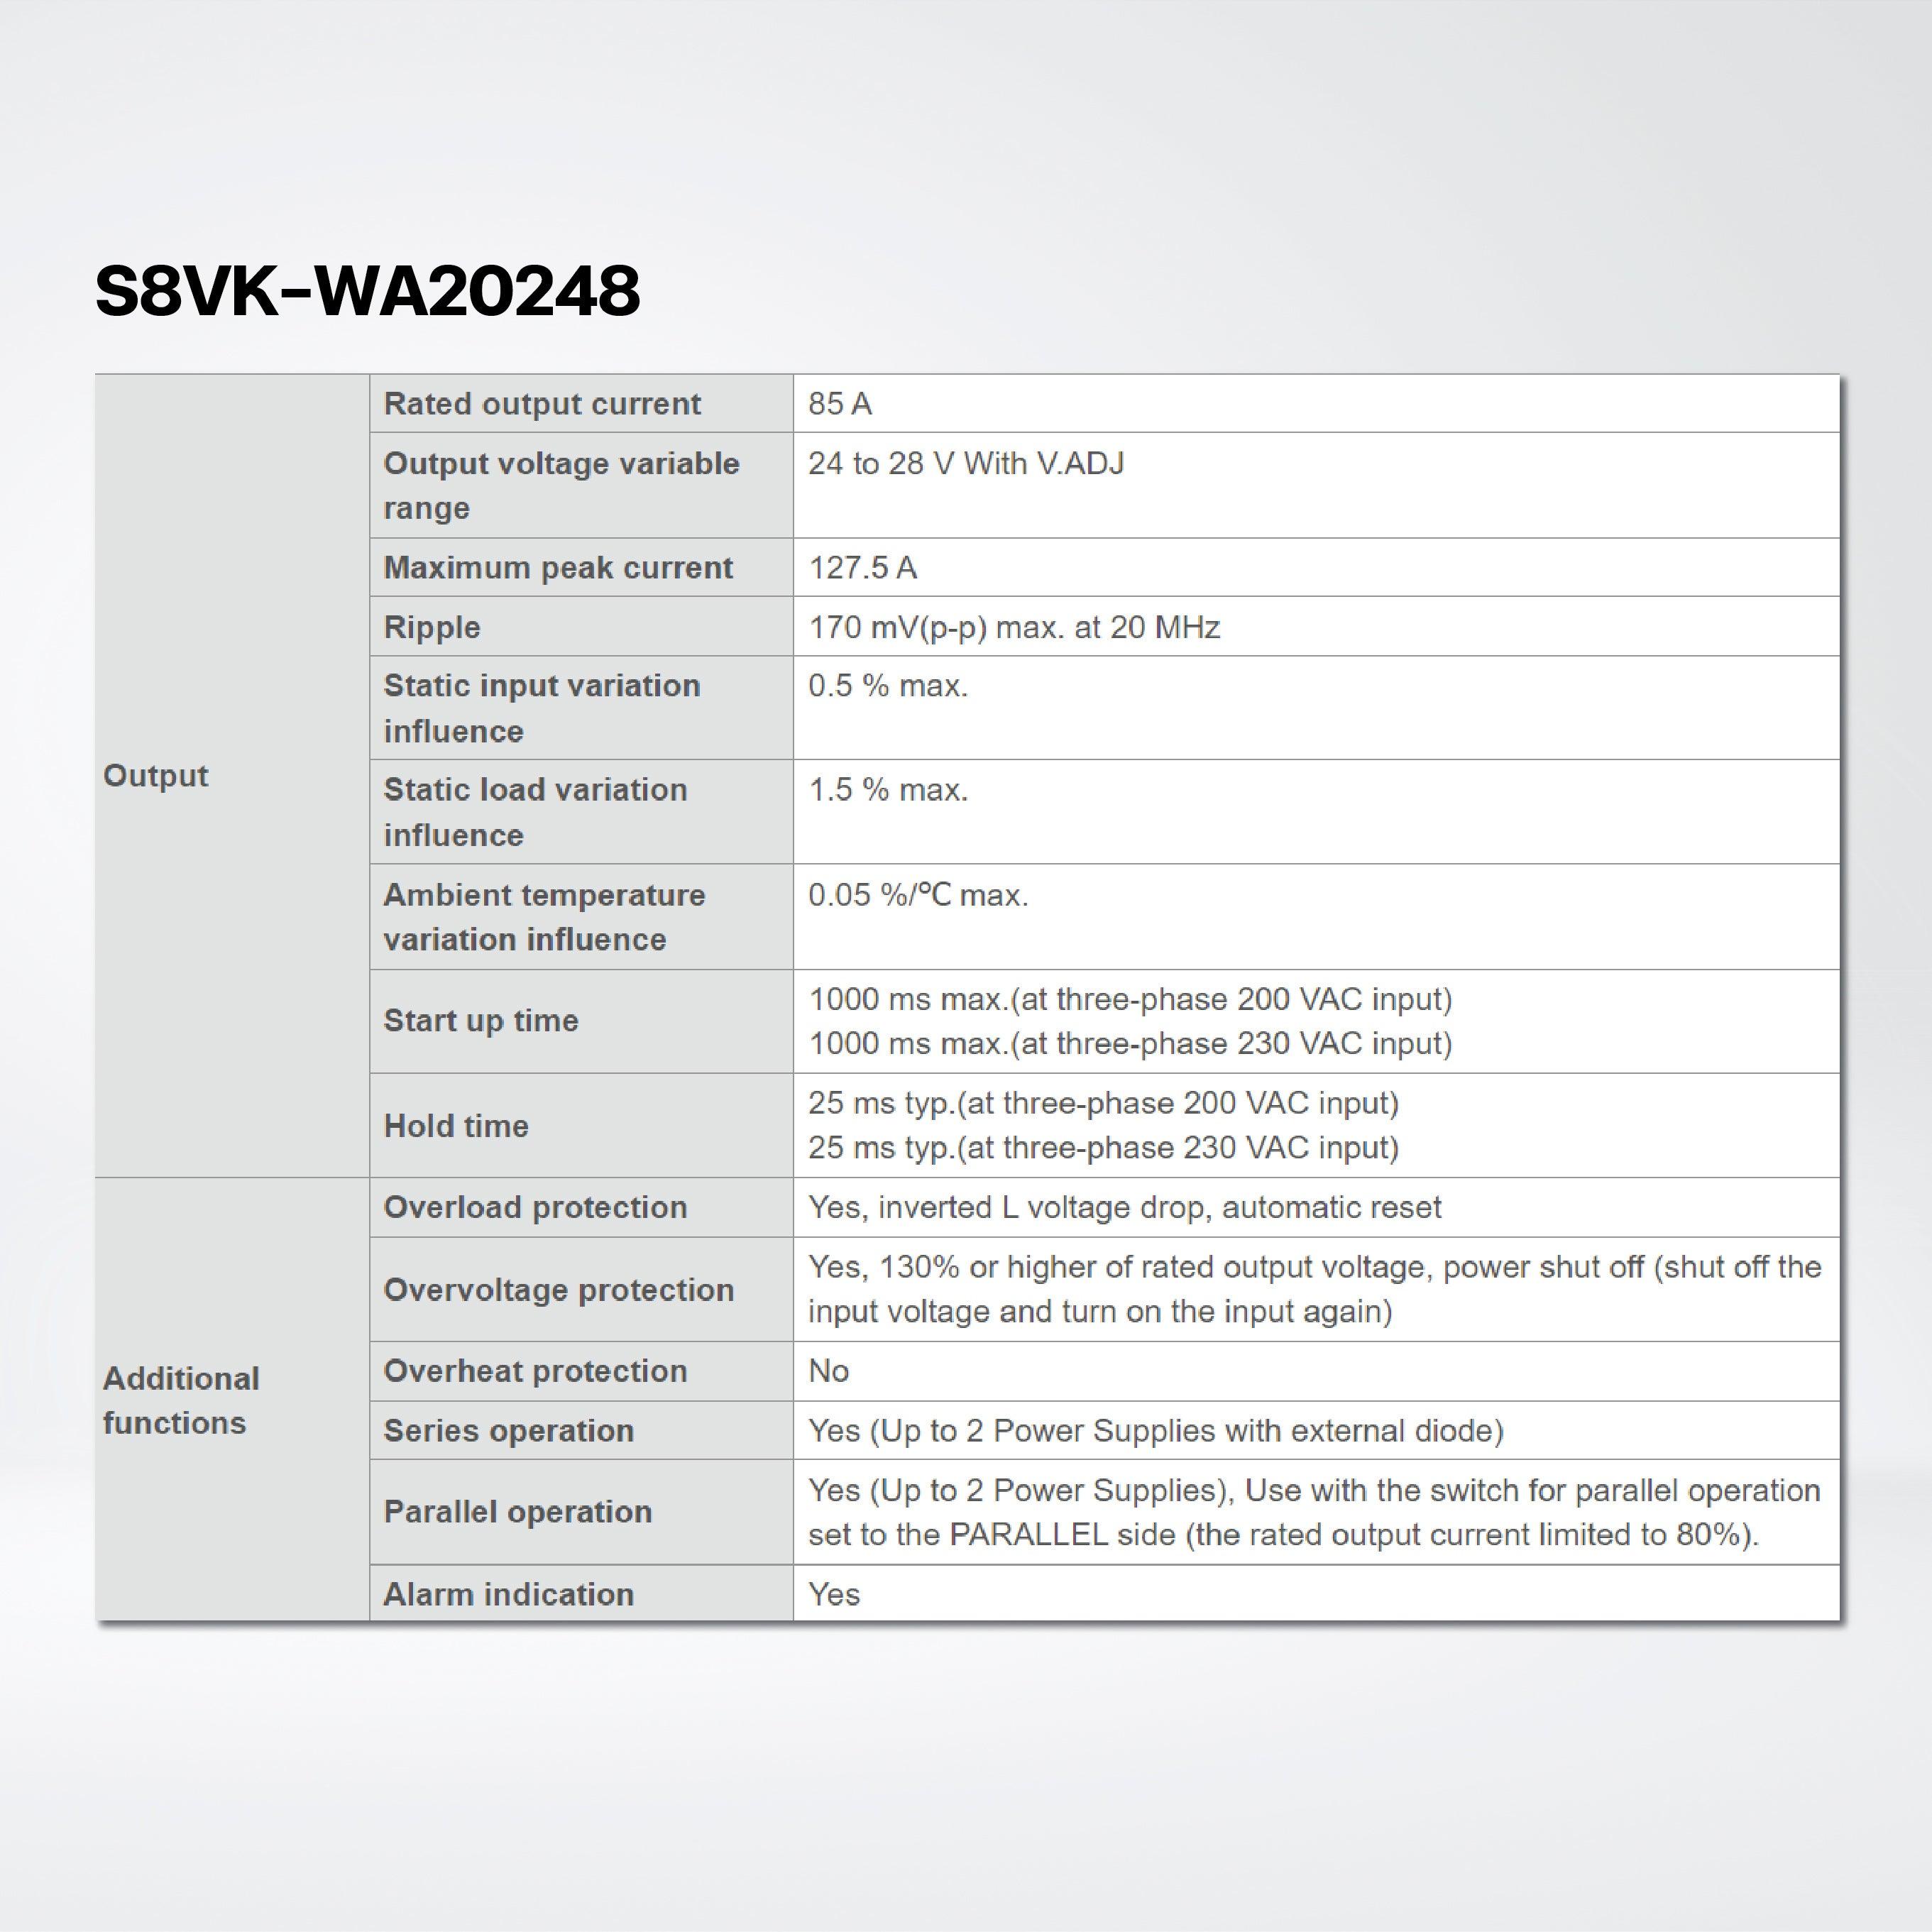 S8VK-WA20224 Three-phase 200 V Power Supplies , Capacity 2000 W , Output voltage 24 VDC - Riverplus